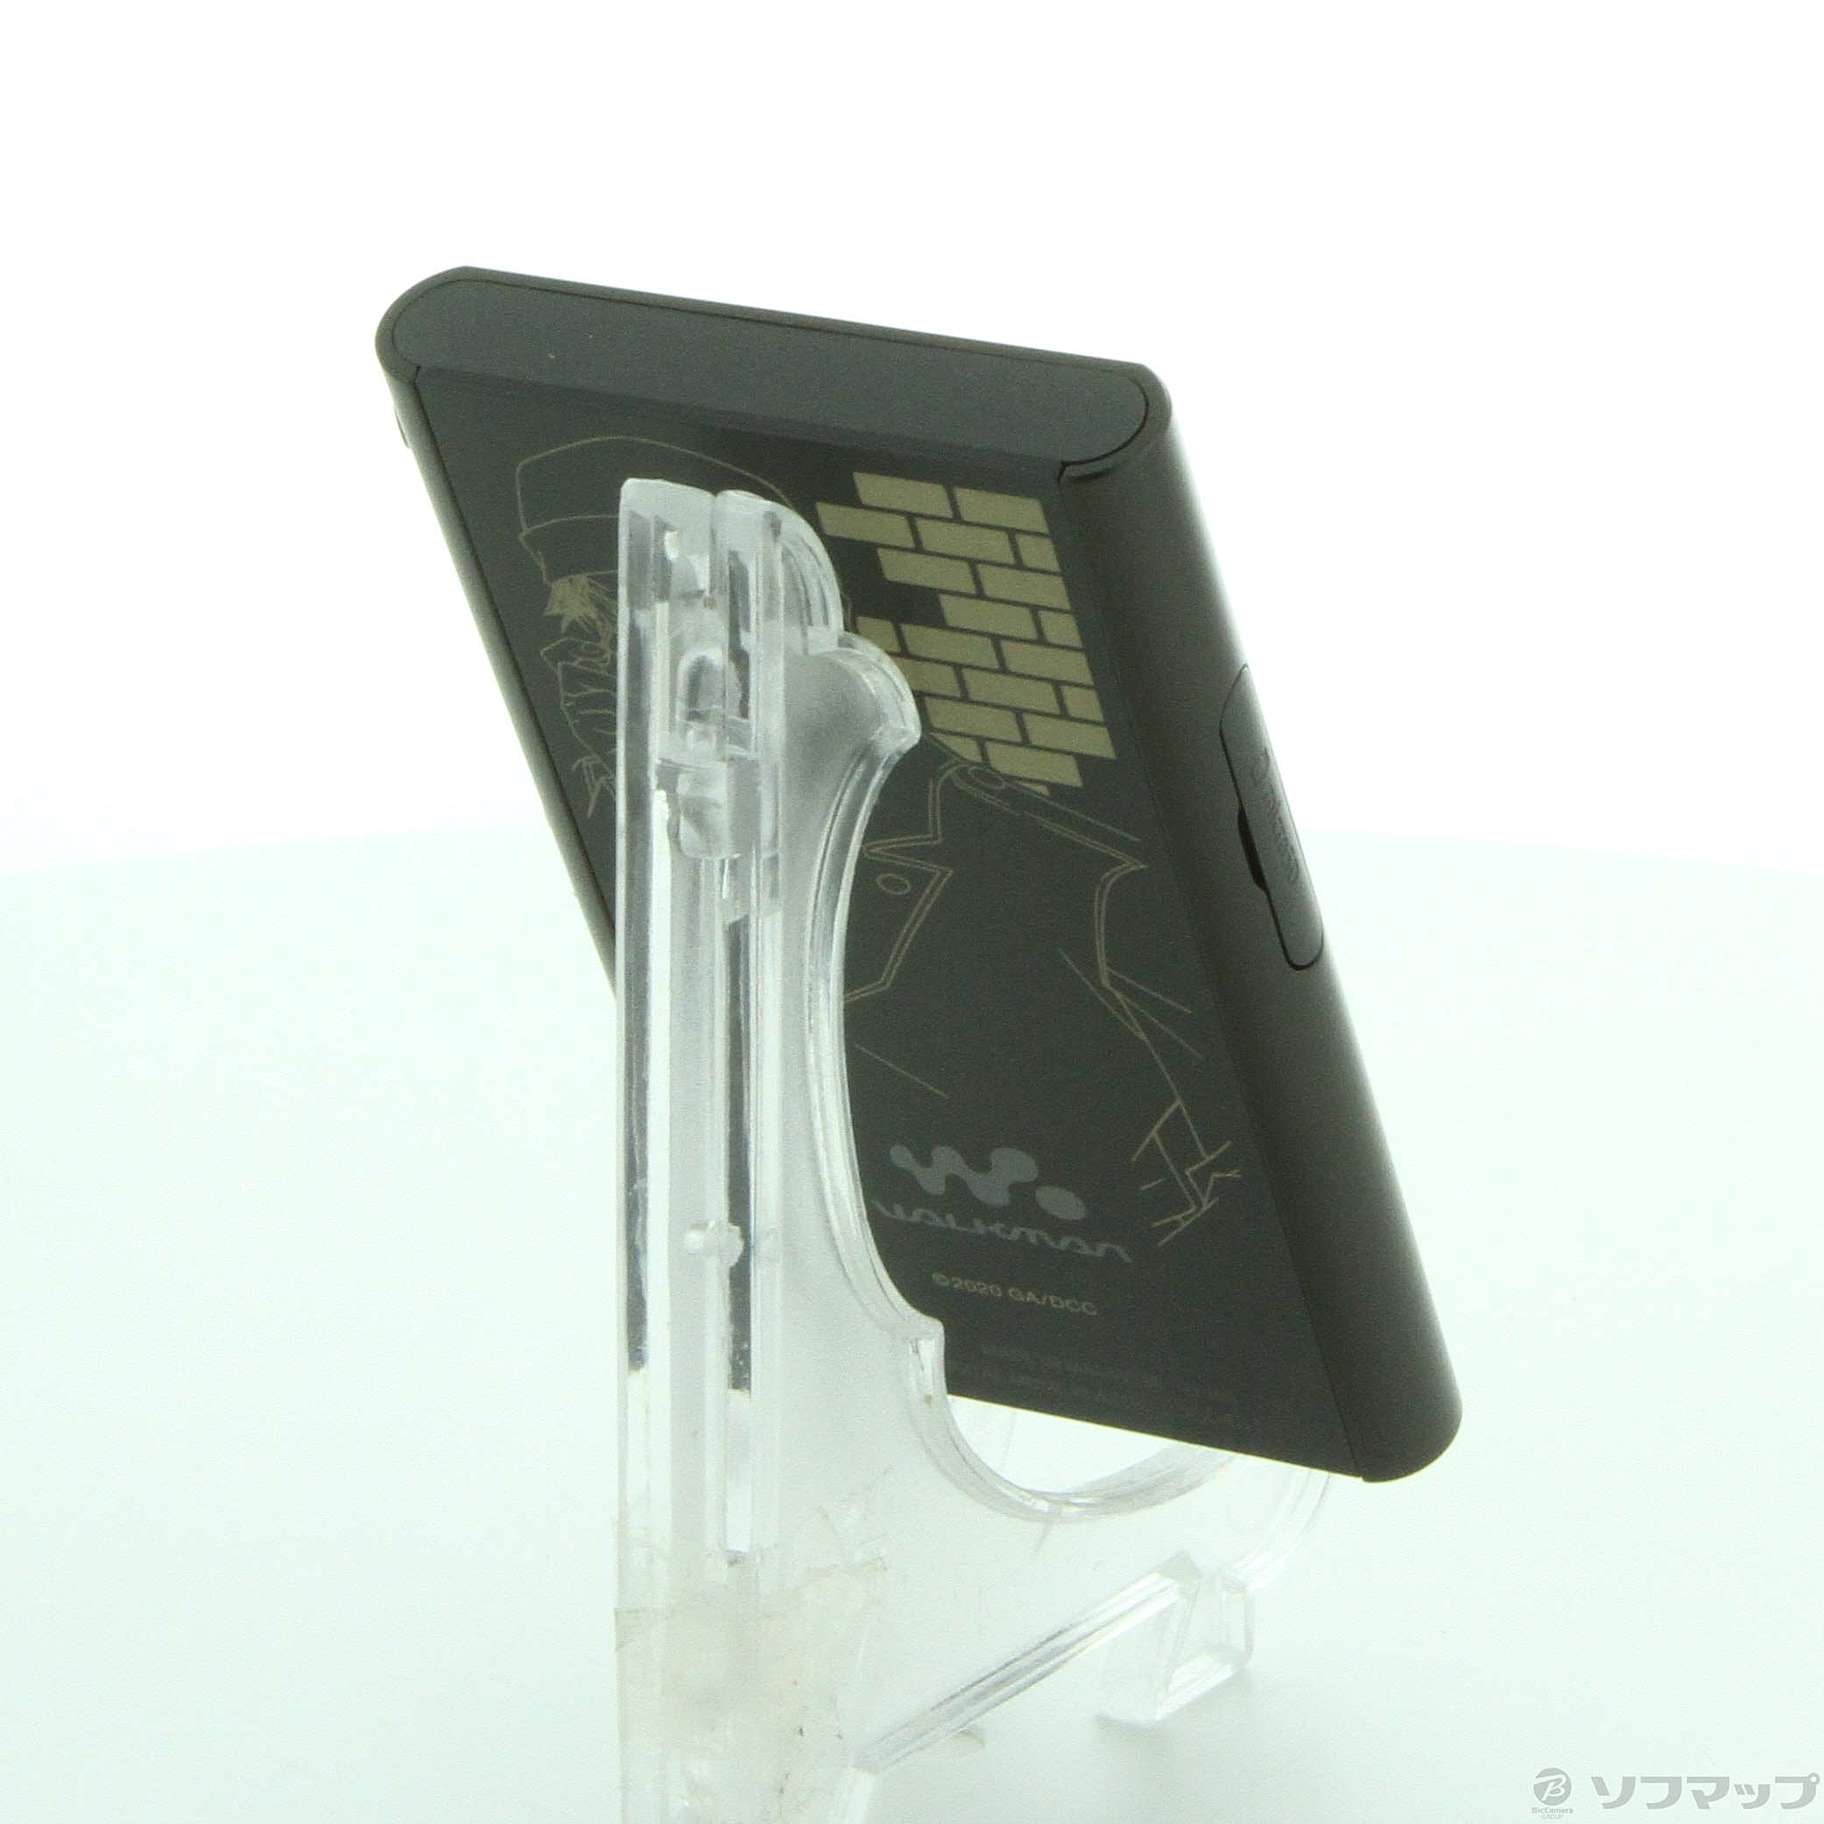 SONY ウォークマン Aシリーズ 赤井秀一モデル NW-A55 16GB-